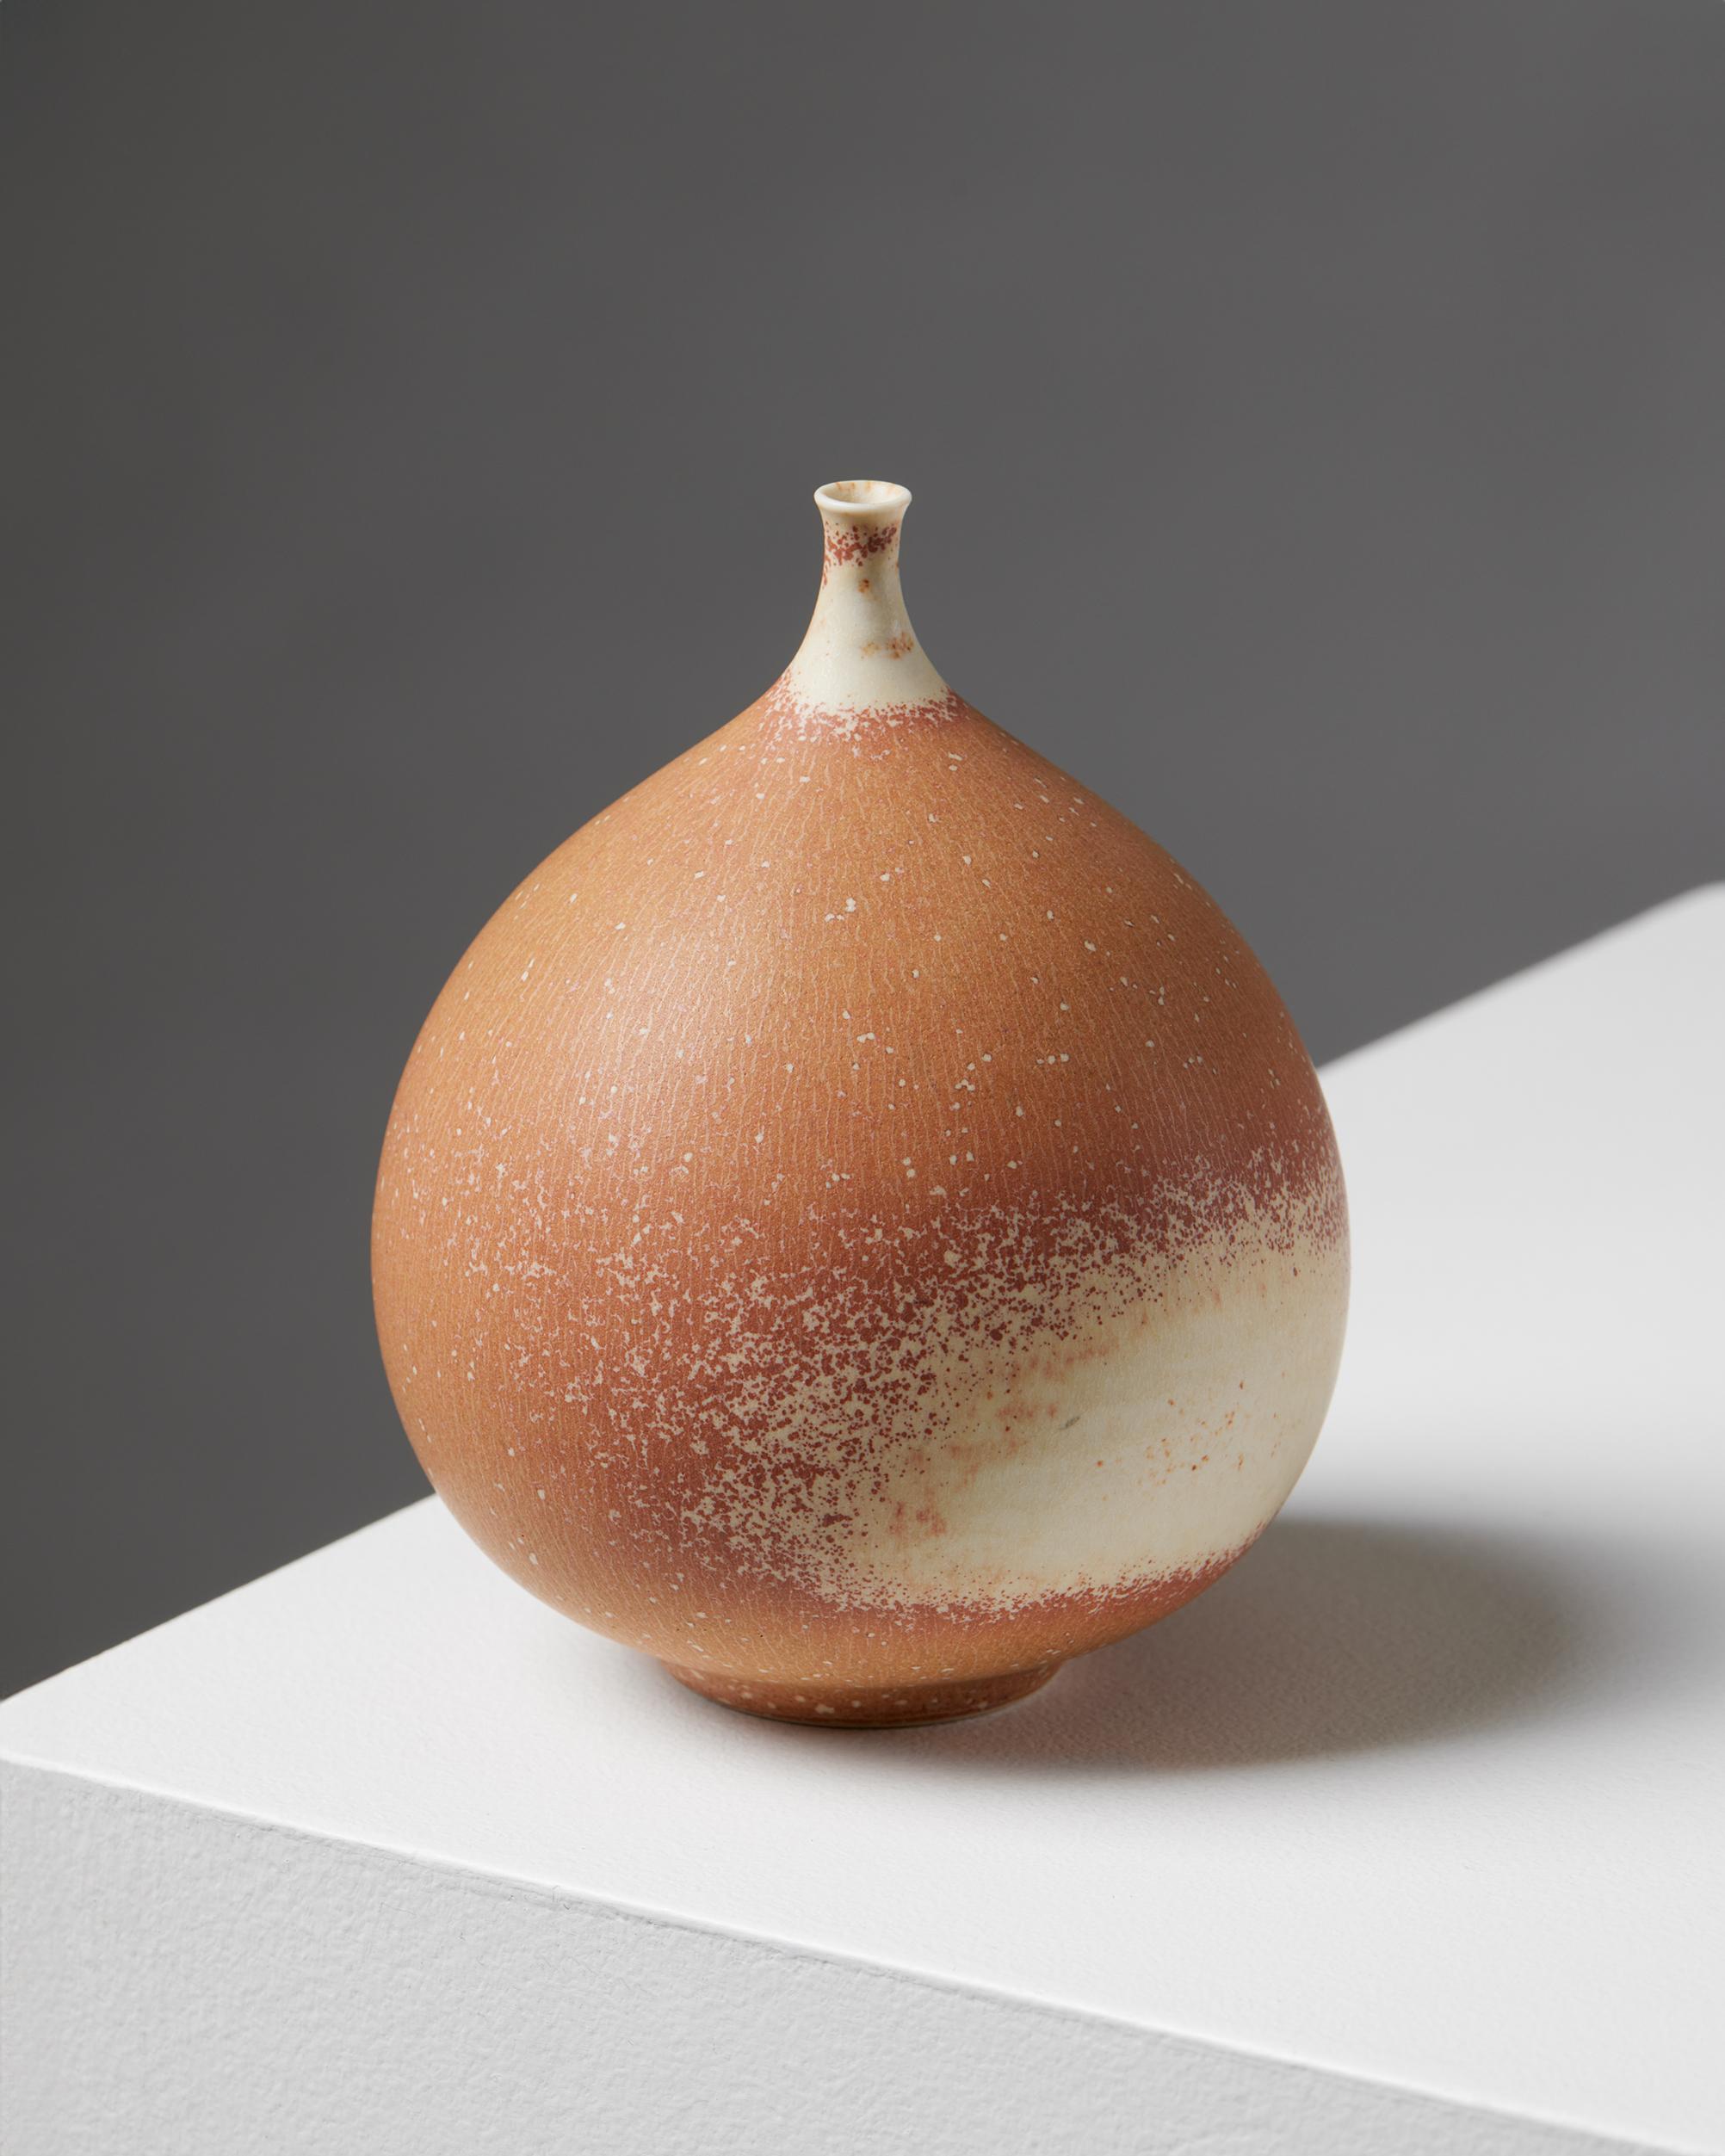 Vase by Vivi Calissendorff, Sweden, 1970s
Stamped.

H: 13 cm
Diameter: 9 cm